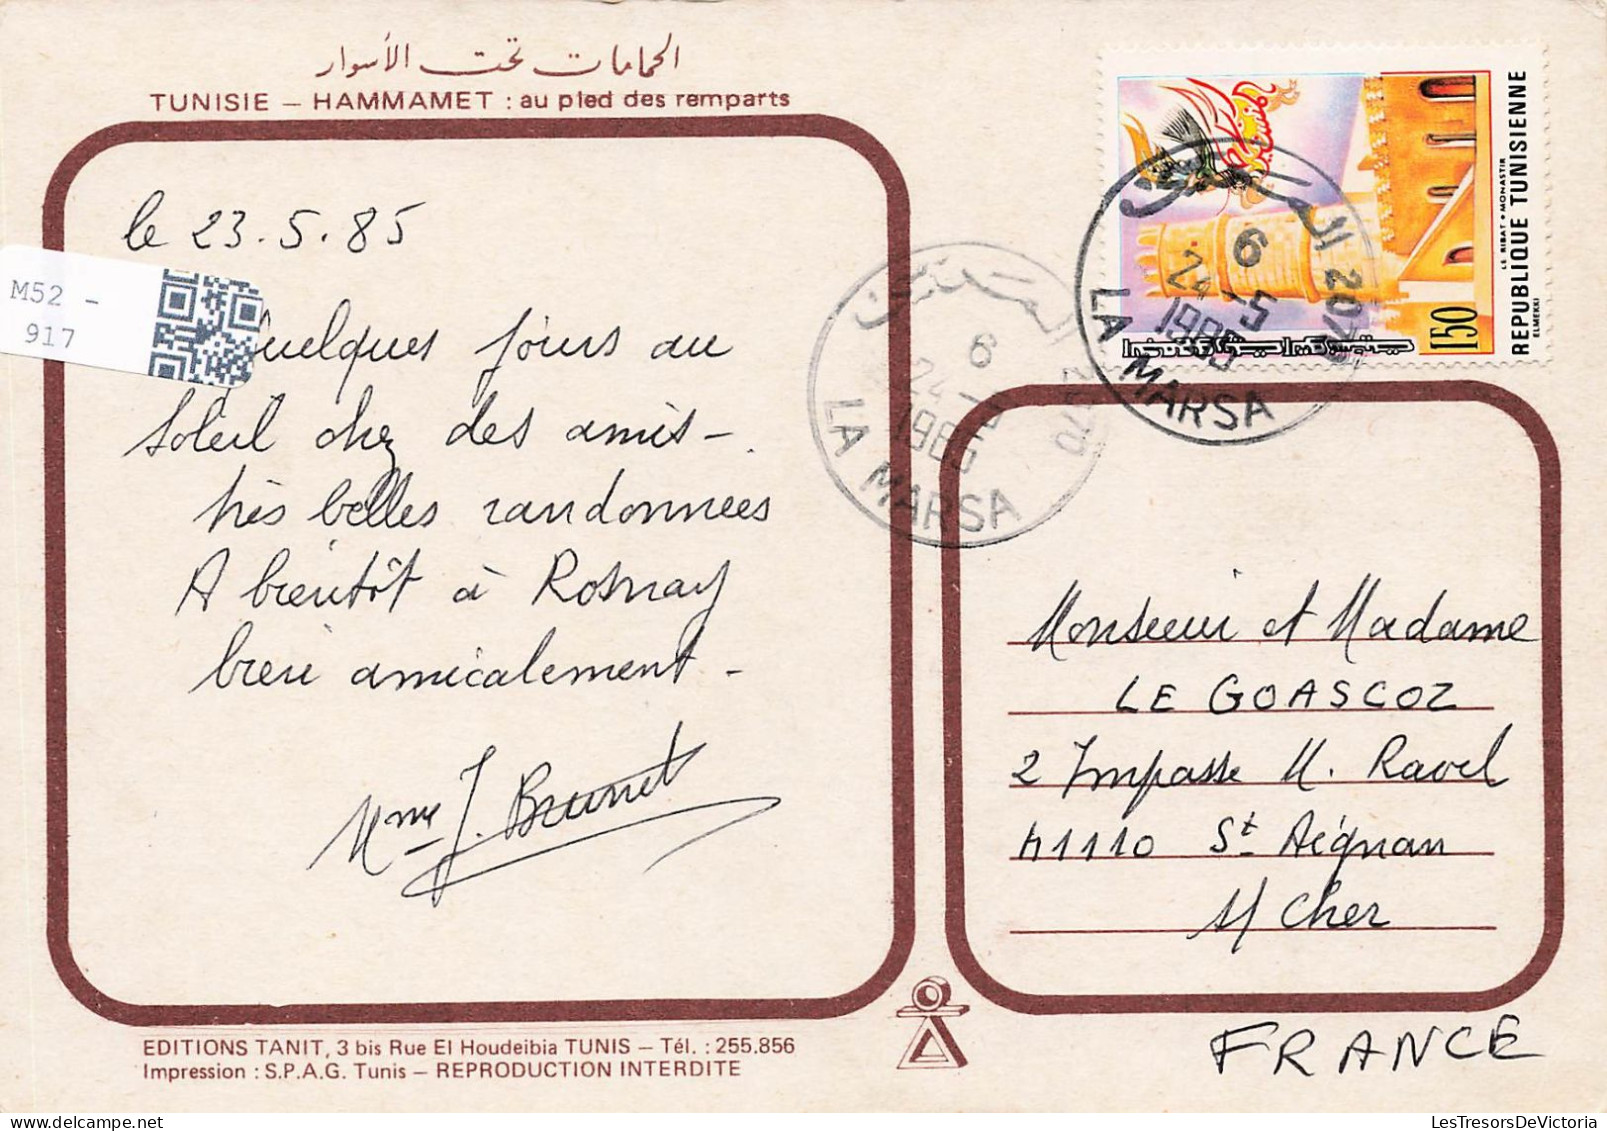 TUNISIE - Hammamet - Au Pied Des Remparts - Carte Postale - Tunisie